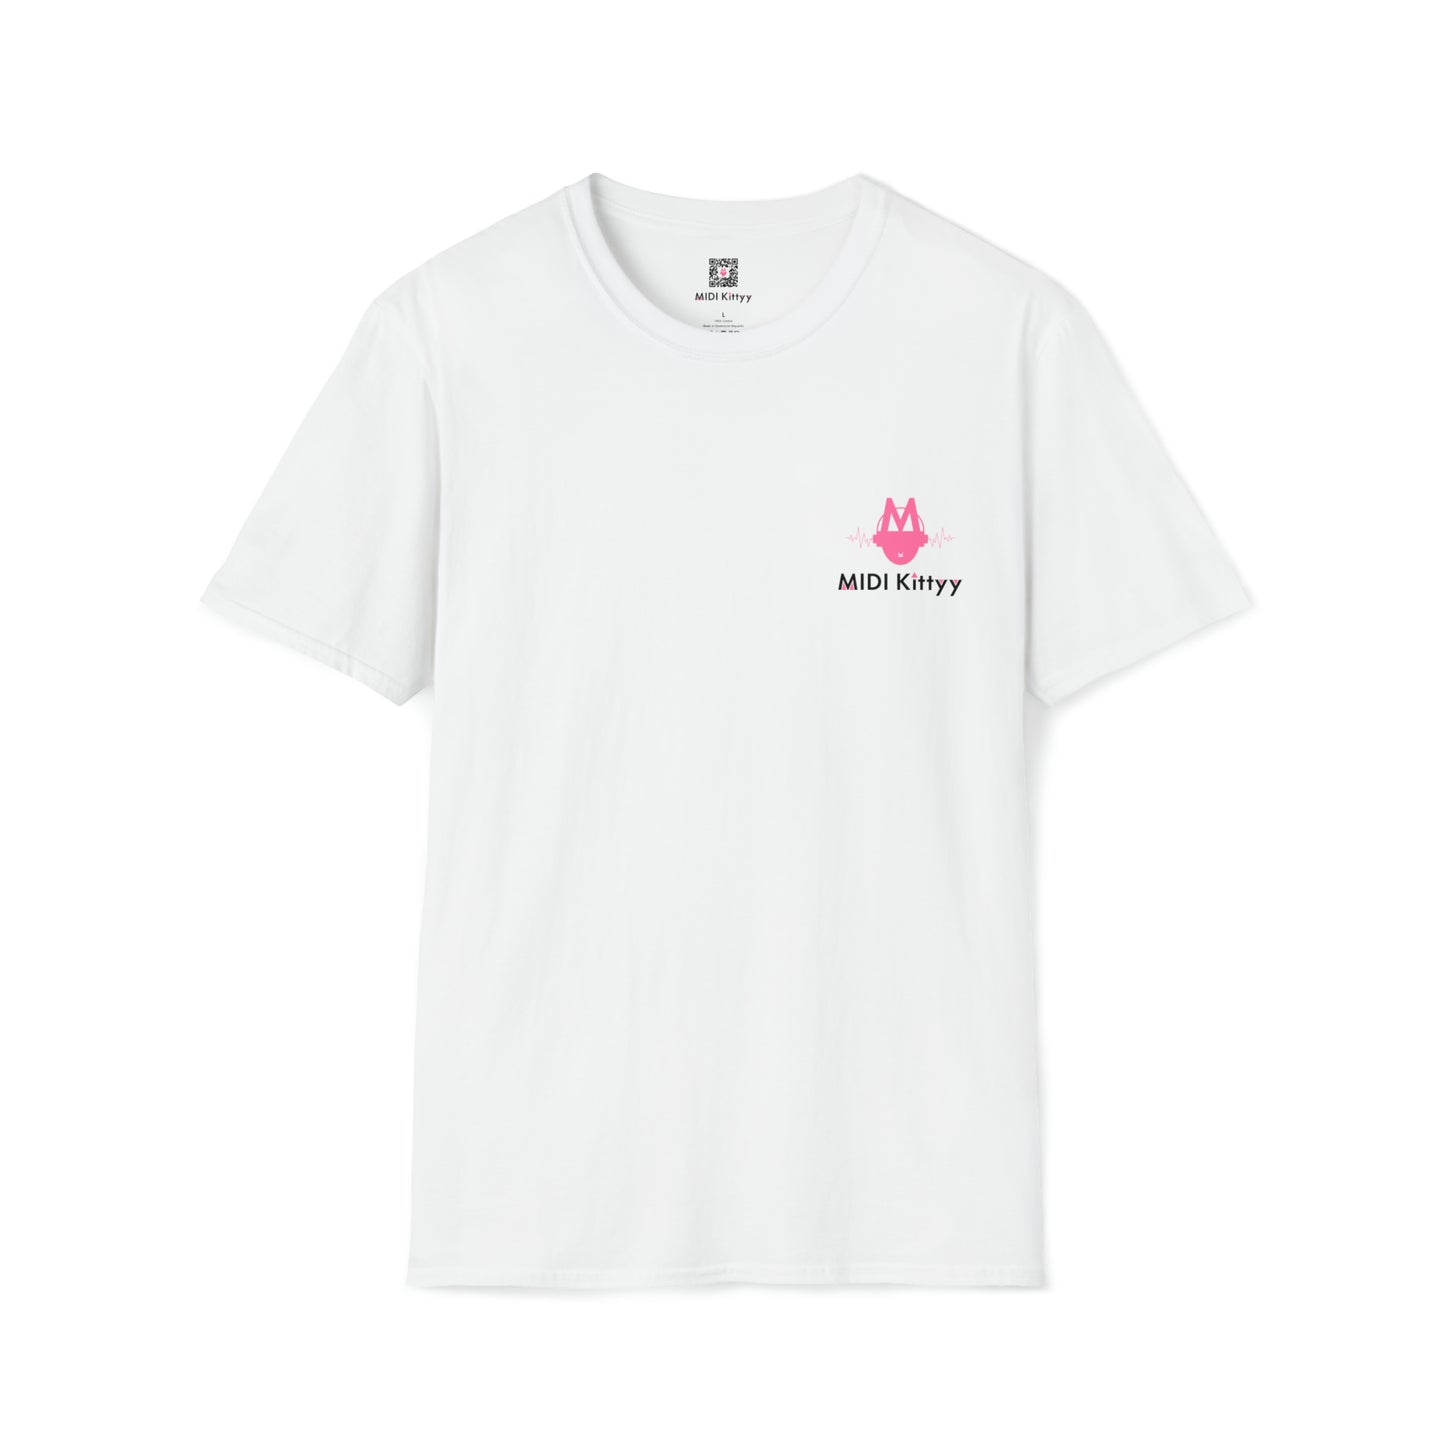 Unisex Softstyle Anime Character T-Shirt